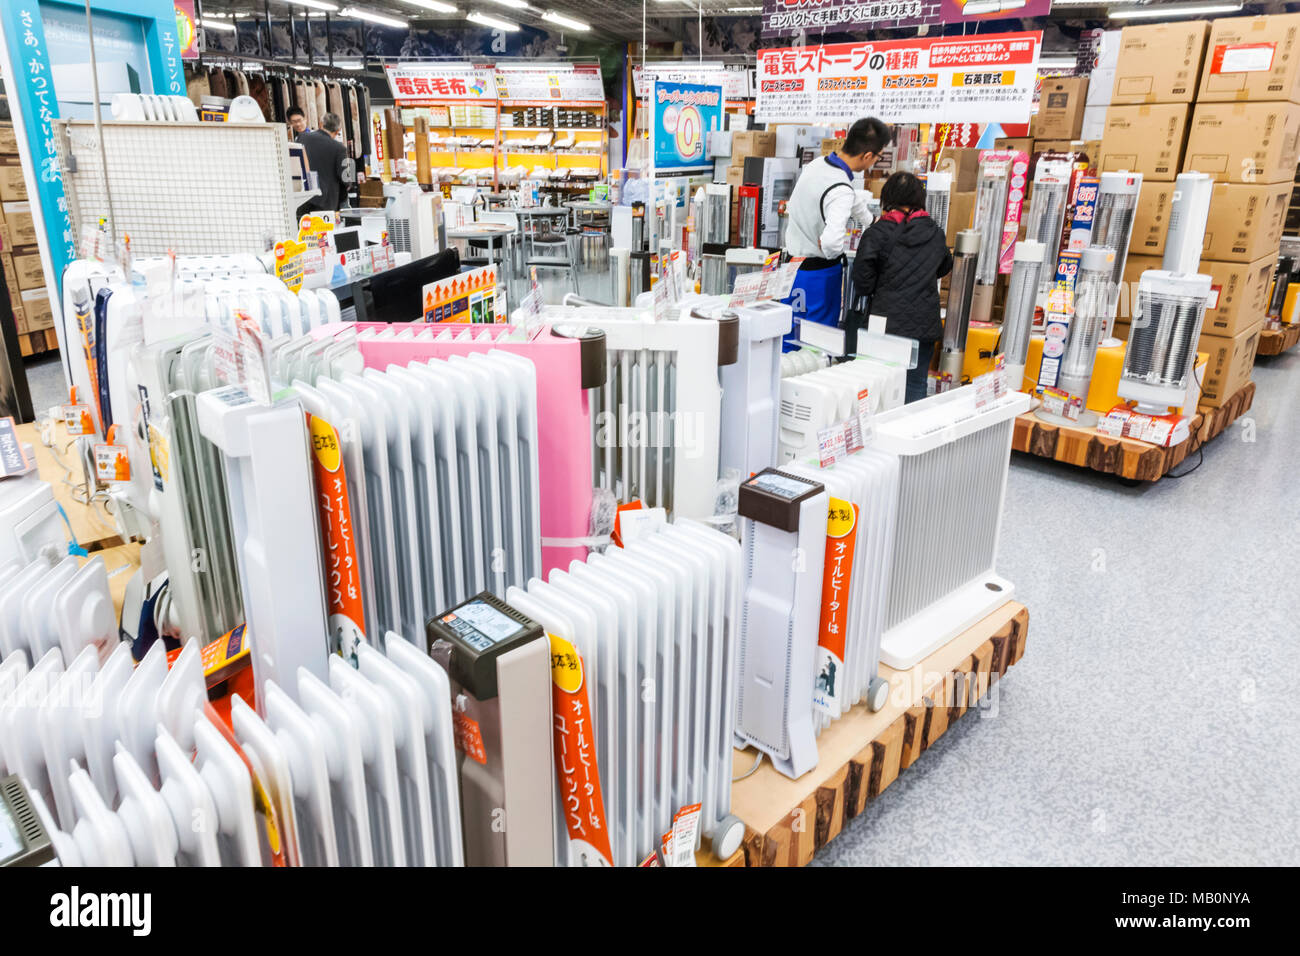 Japan, Hoshu, Tokyo, Akihabara, Yodobashi-Akiba Store, Display of Heaters Stock Photo